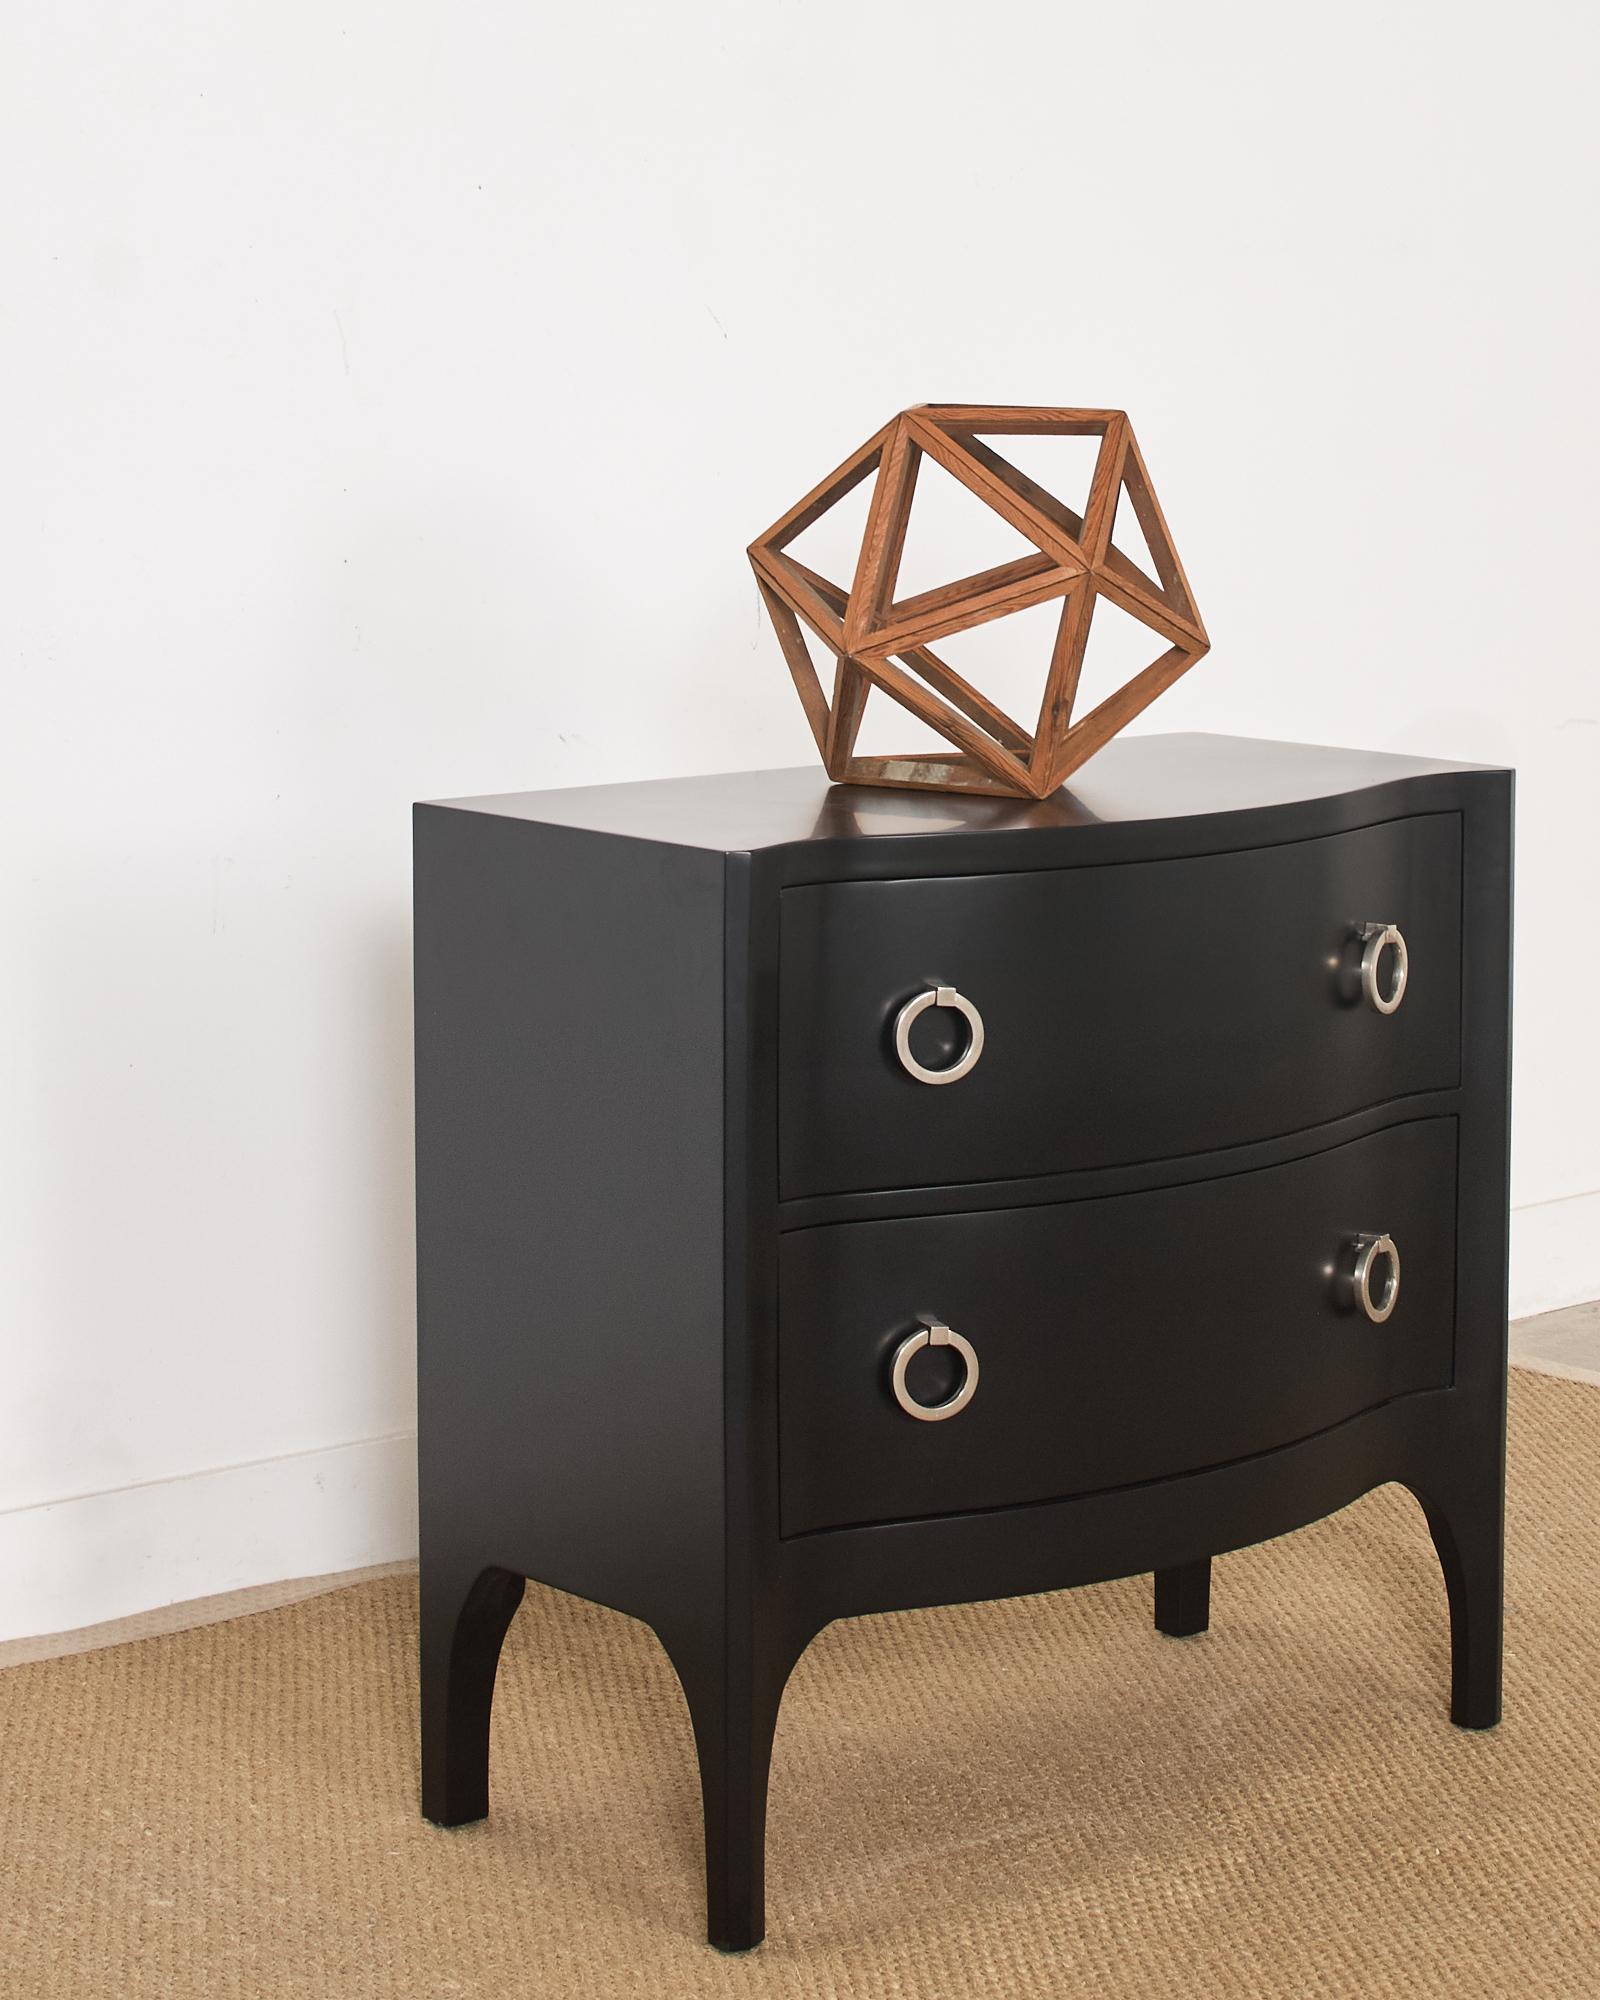 Wooden Geometric Icosahedron Objet D' Art For Sale 6